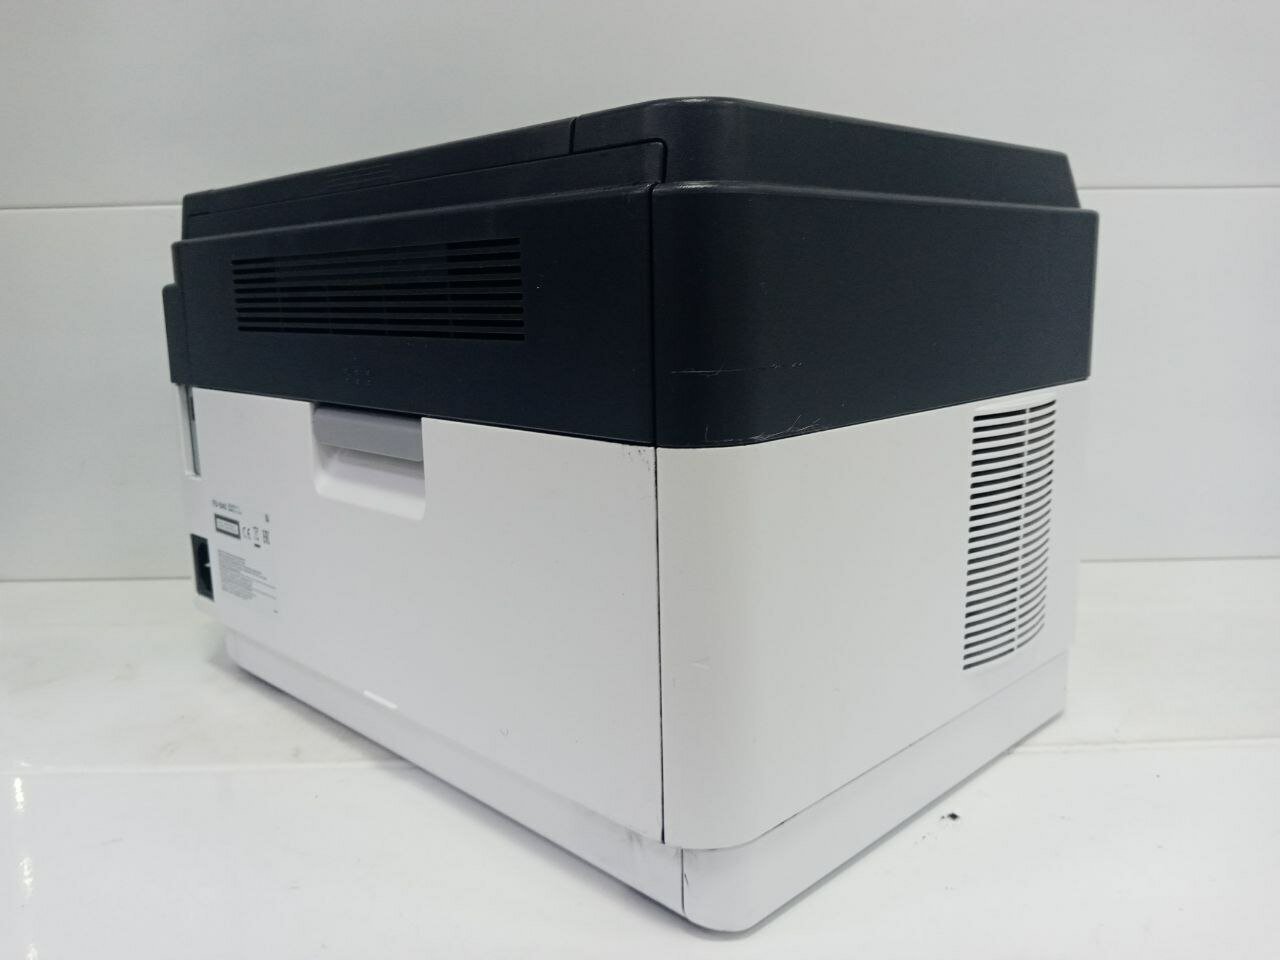 Принтер лазерный KYOCERA FS-1040 ч/б A4